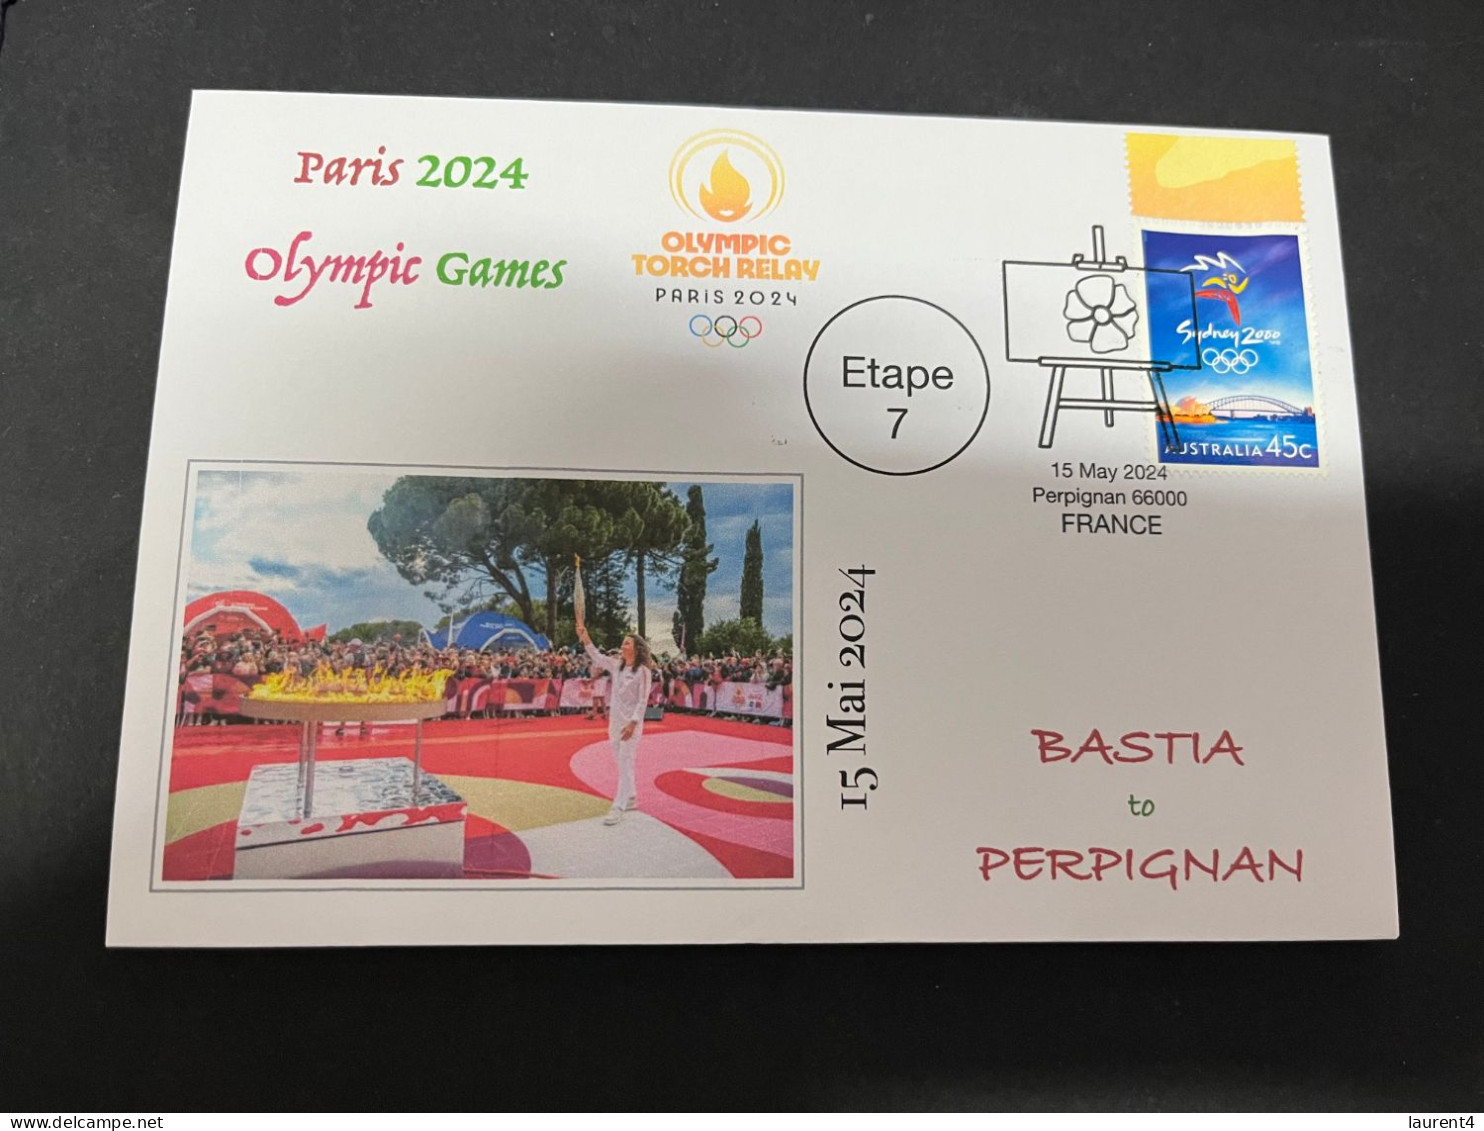 16-5-2024 (5 Z 17) Paris Olympic Games 2024 - Torch Relay (Etape 7) In Perpignan (15-5-2024) With OLYMPIC Stamp - Eté 2024 : Paris